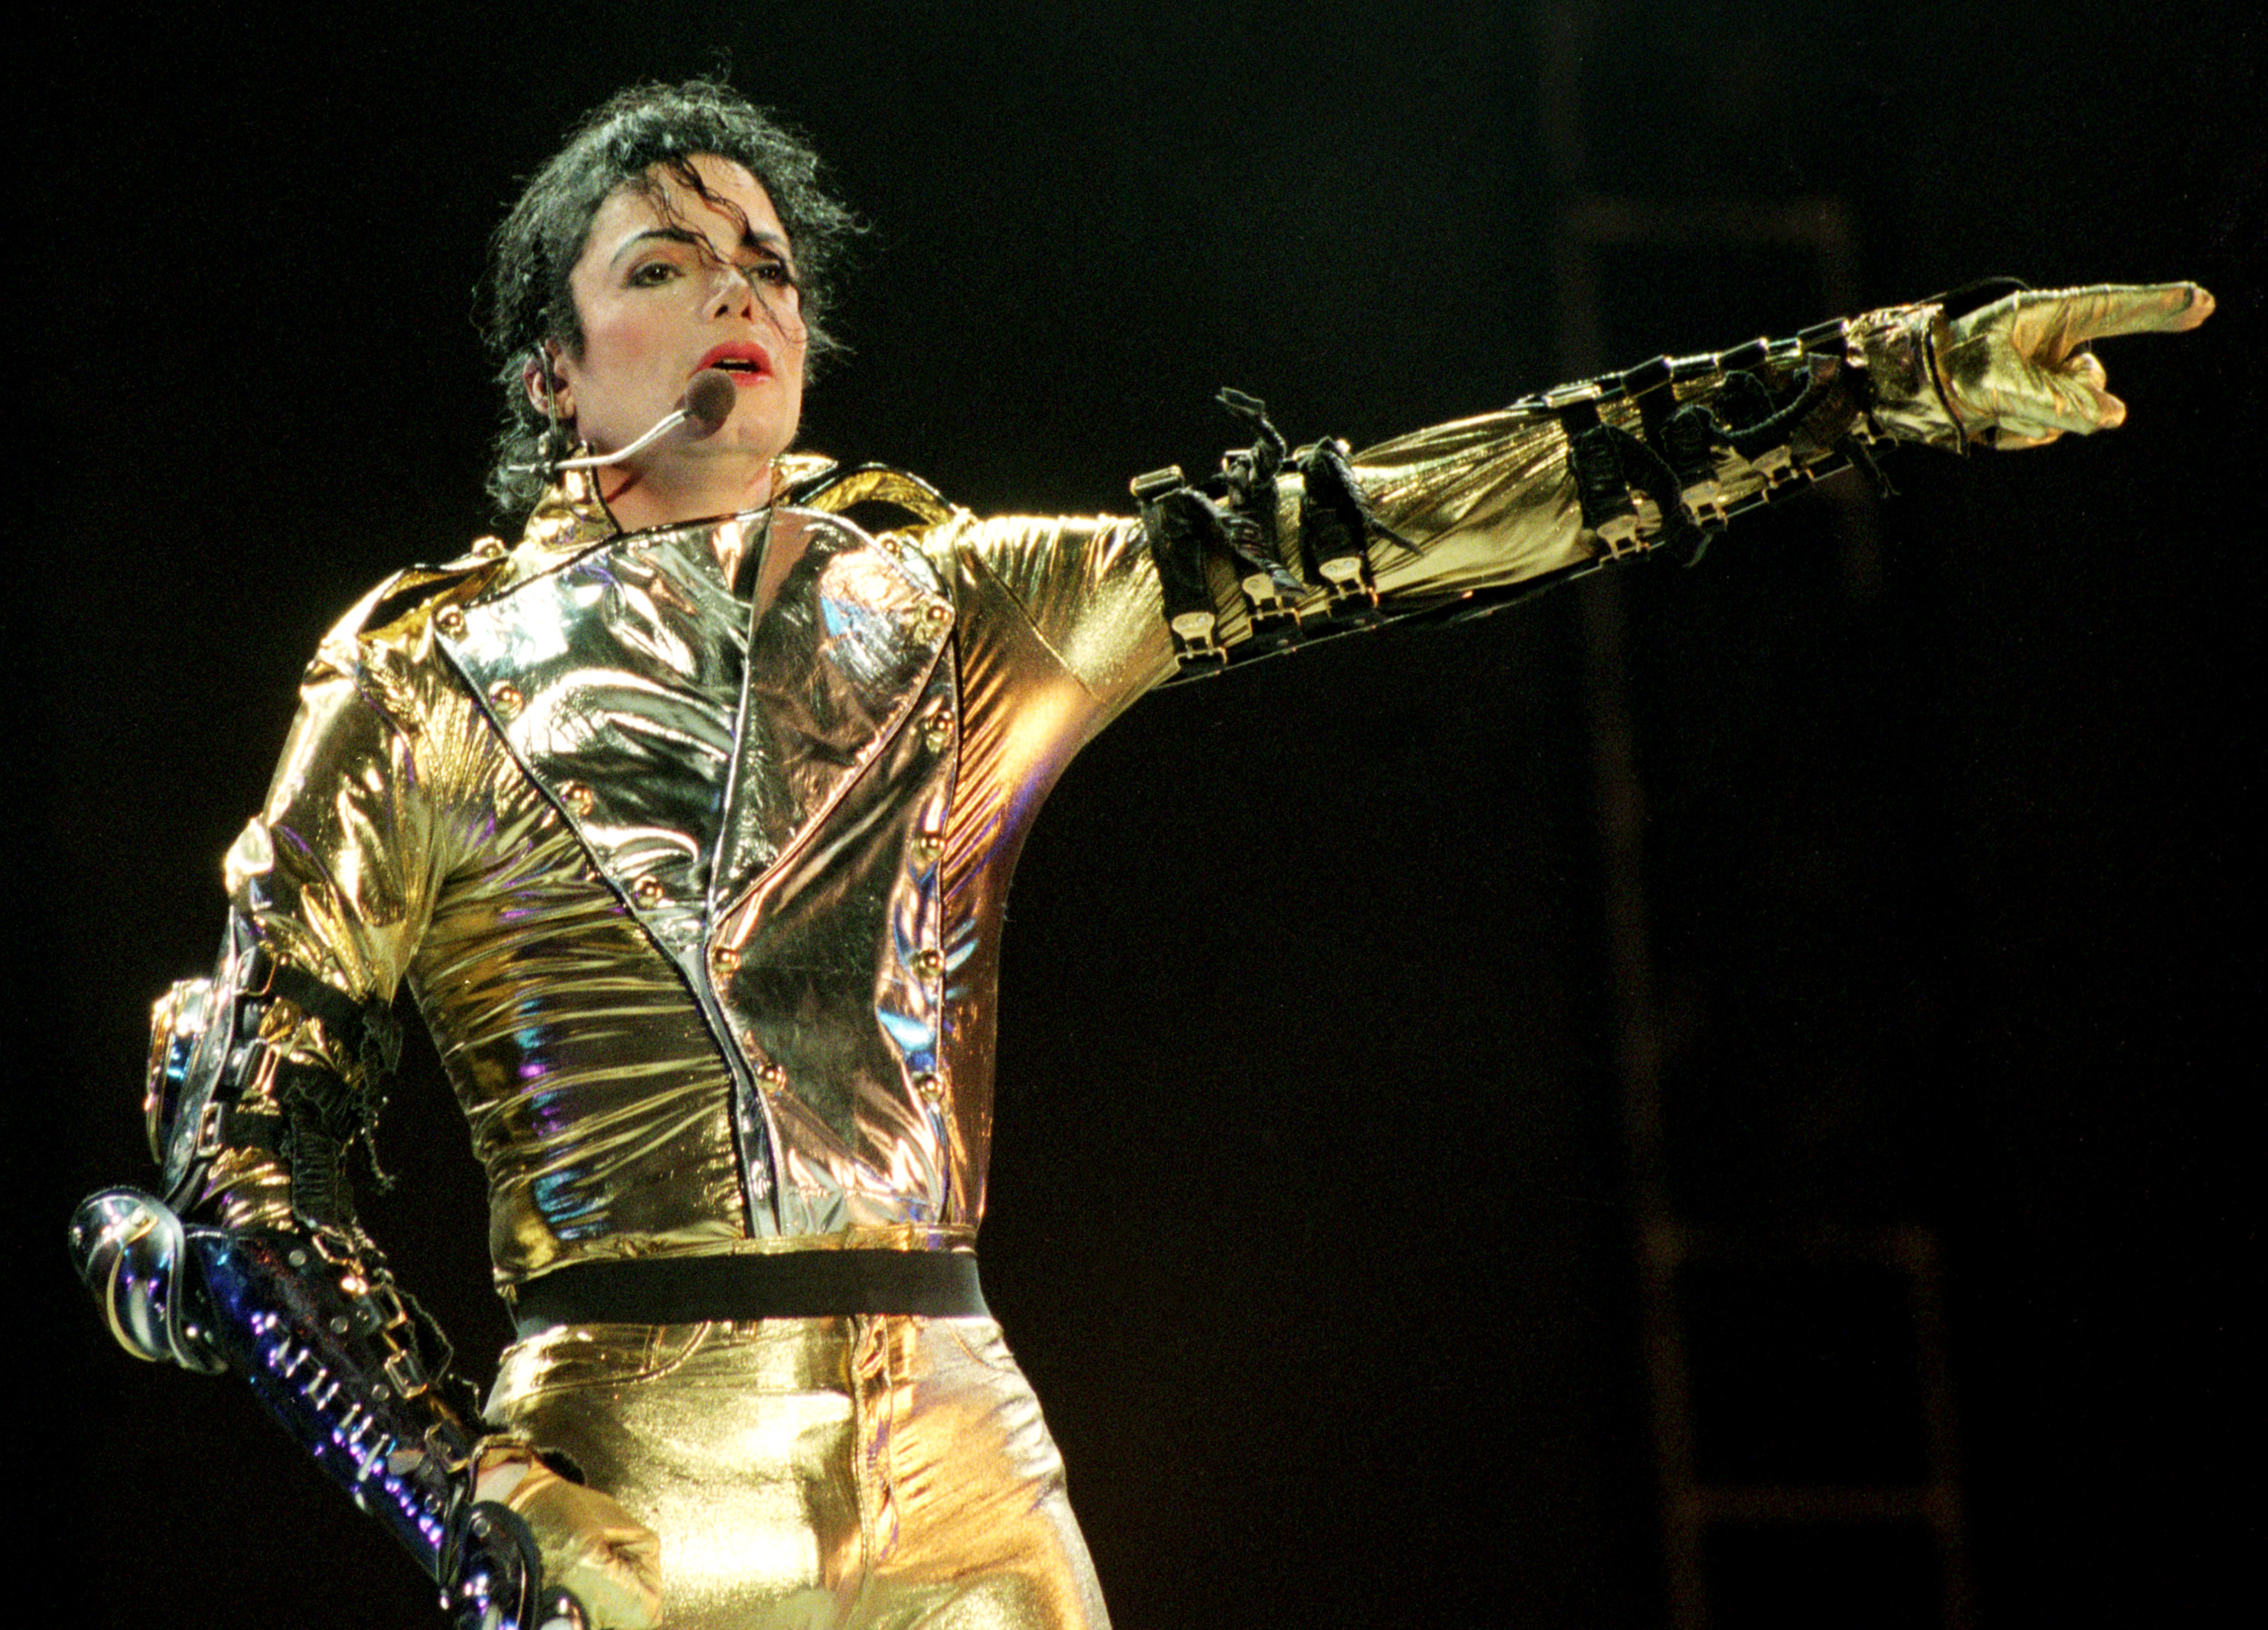 Retiran estatua de Michael Jackson en Manchester tras la salida del documental Leaving Neverland